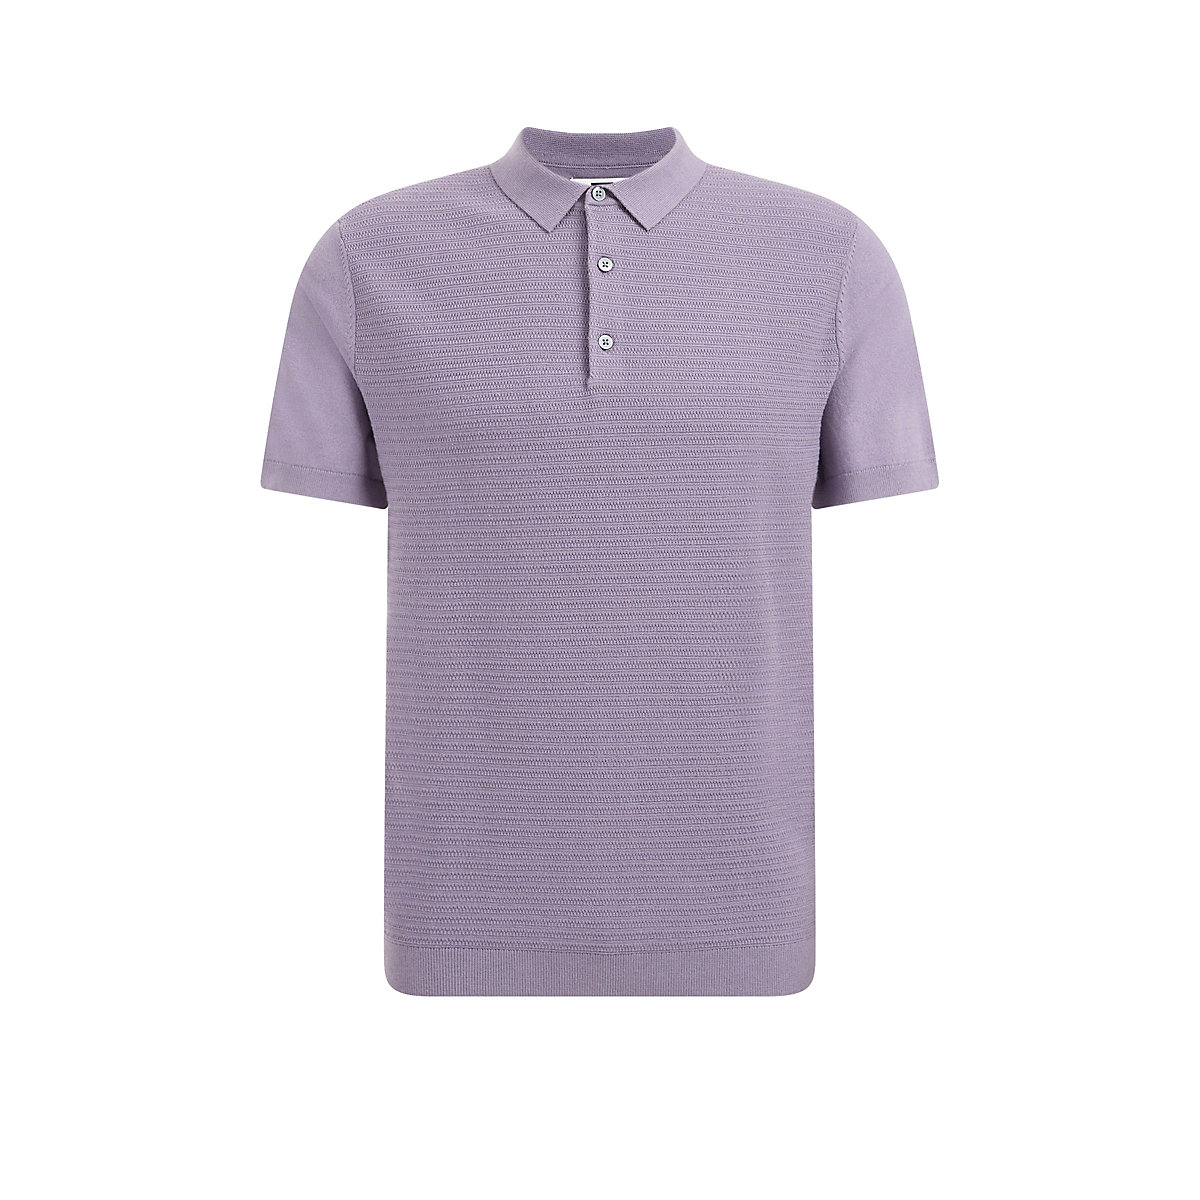 WE Fashion Herren-Poloshirt mit Strukturmuster Poloshirts violett